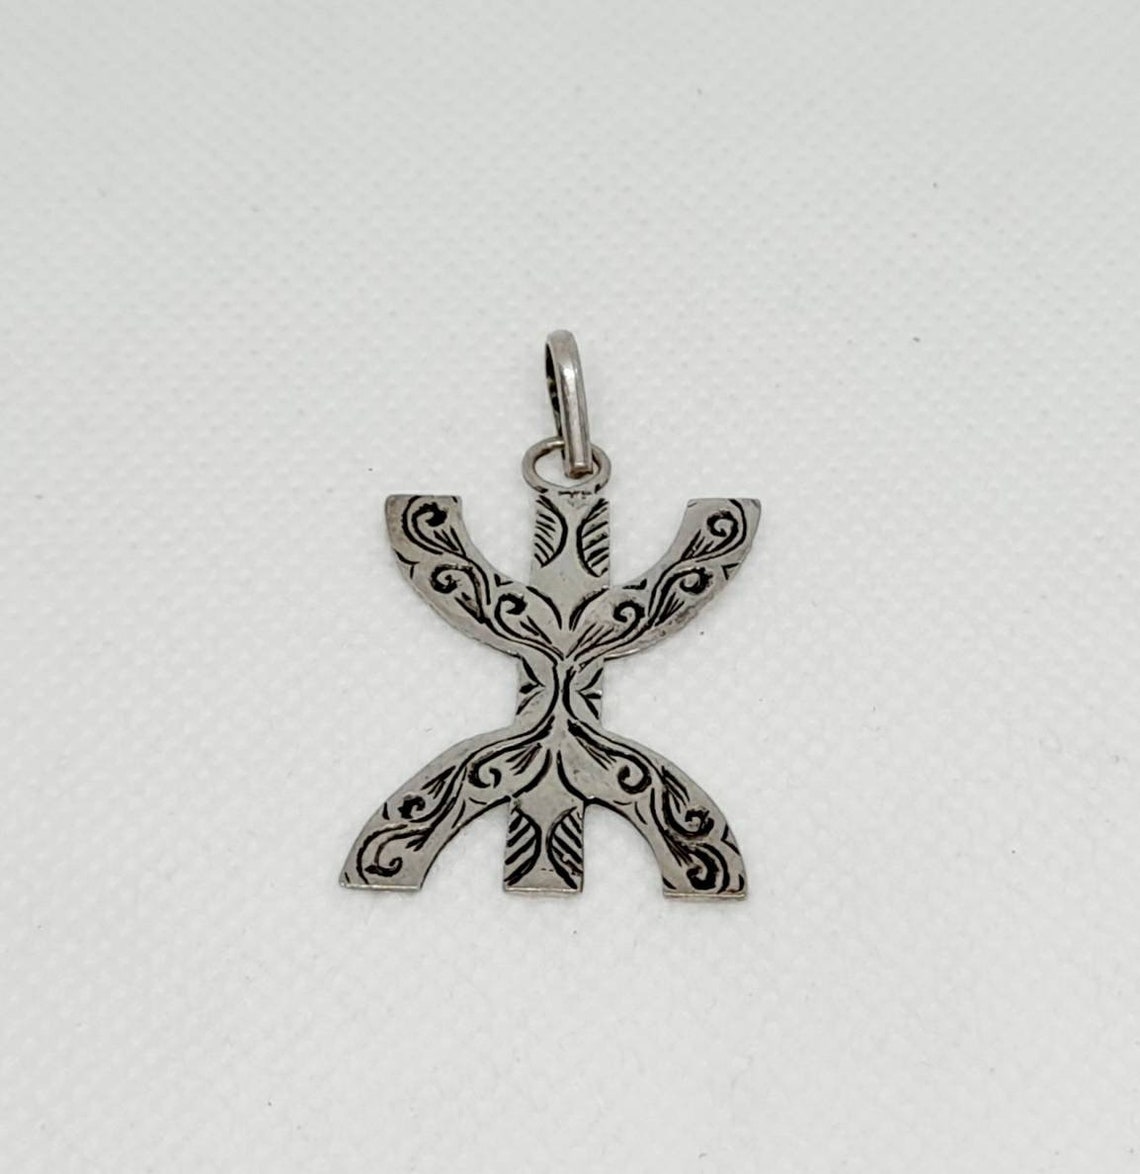 Berber handmade solid silver pendant with amazigh symbol | Etsy